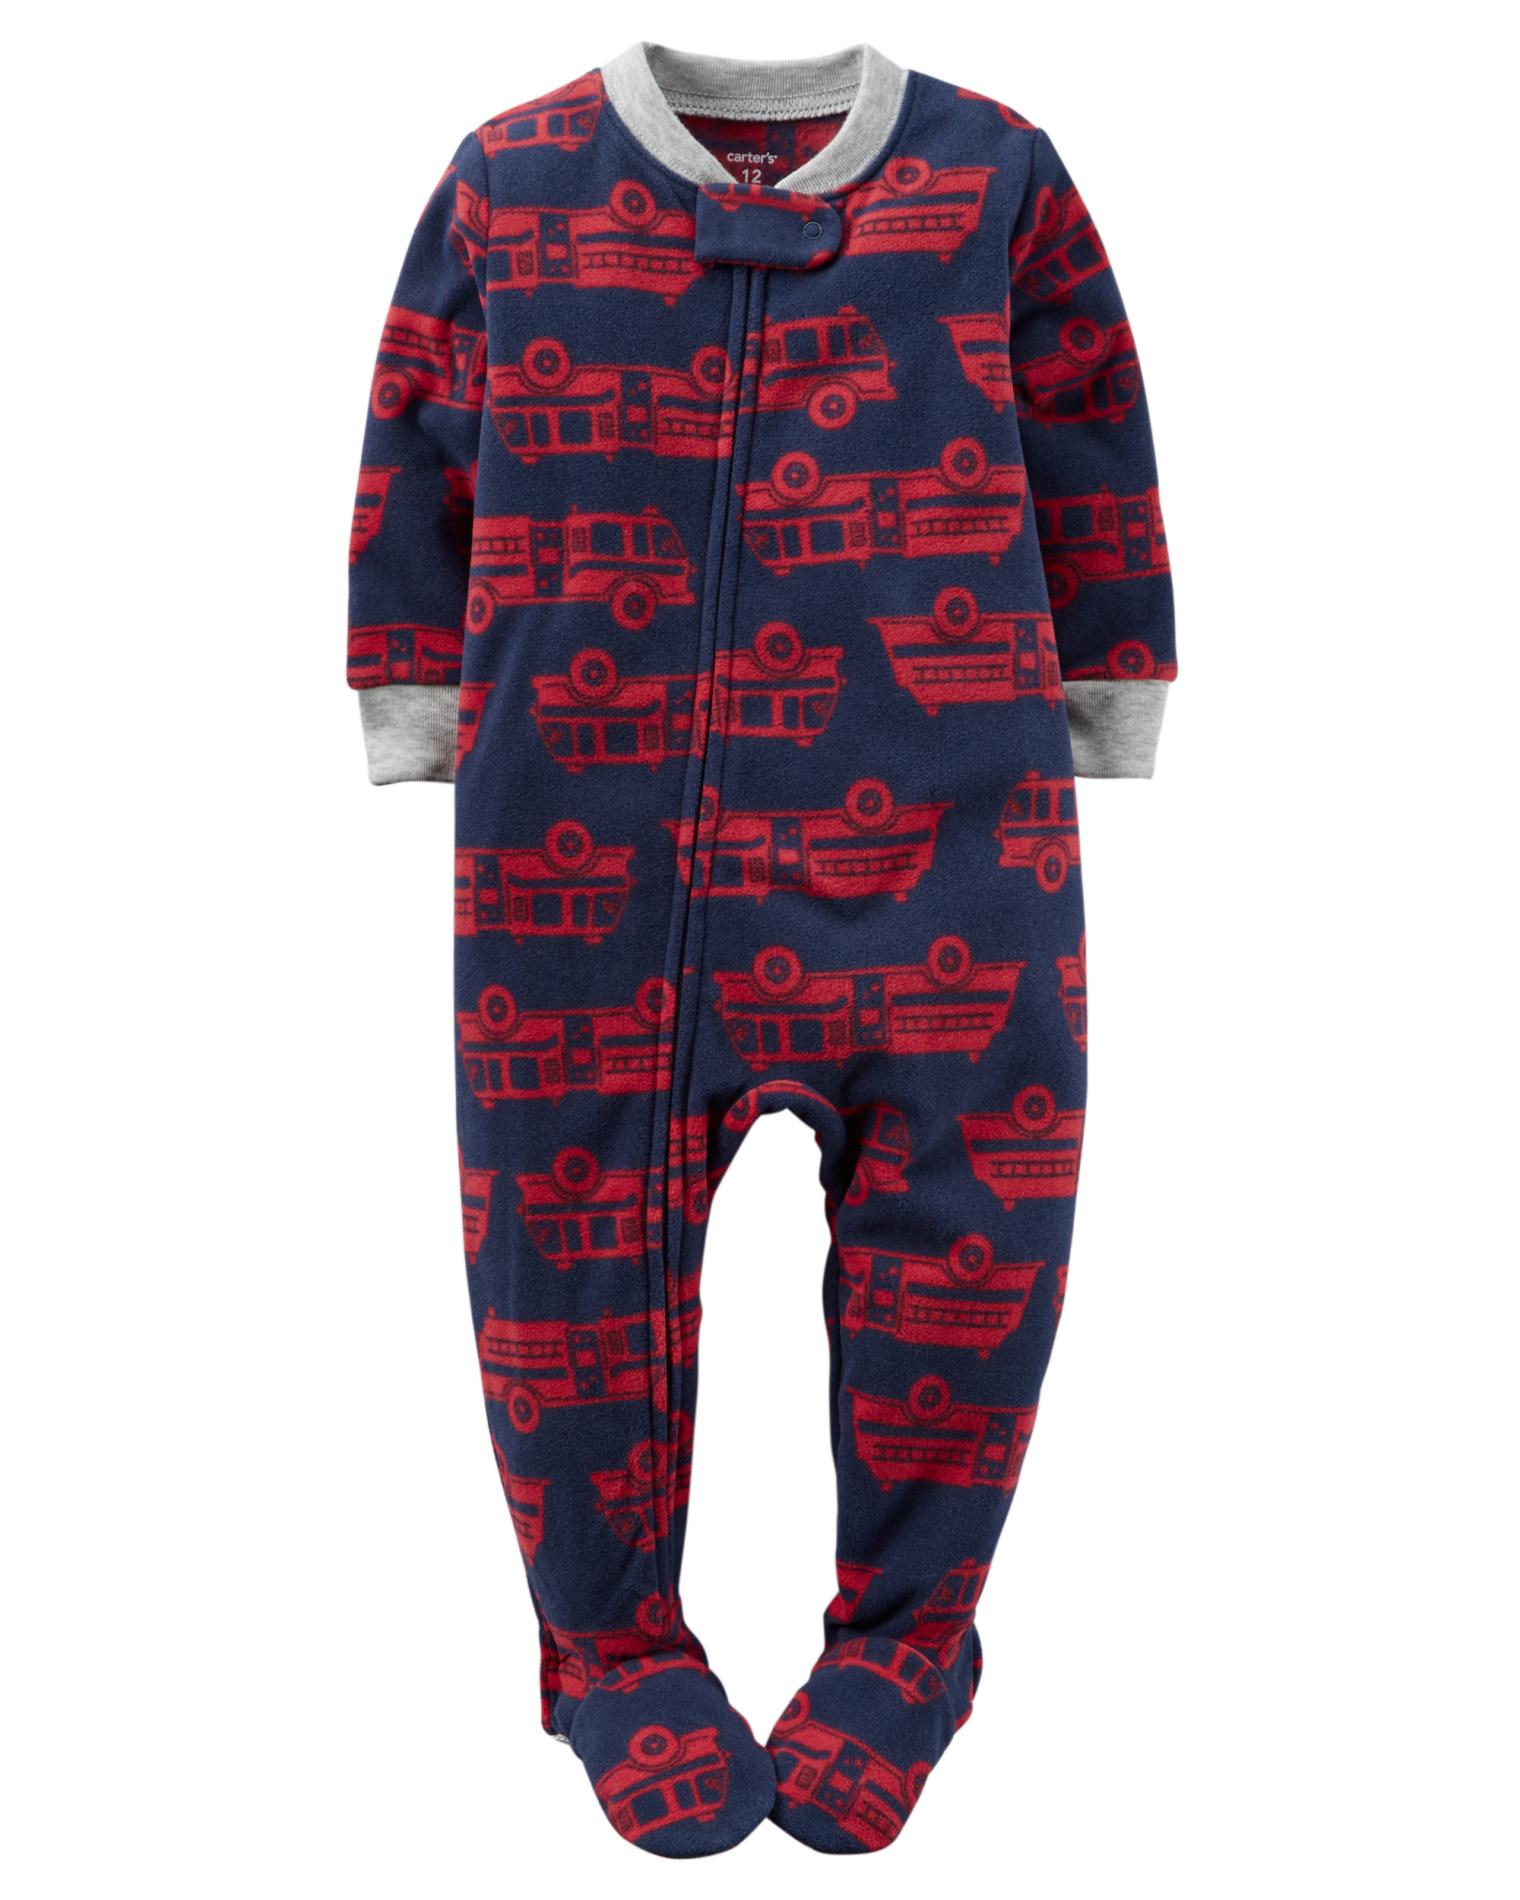 Carter's Infant & Toddler Boys' Fleece Sleeper Pajamas - Firetruck